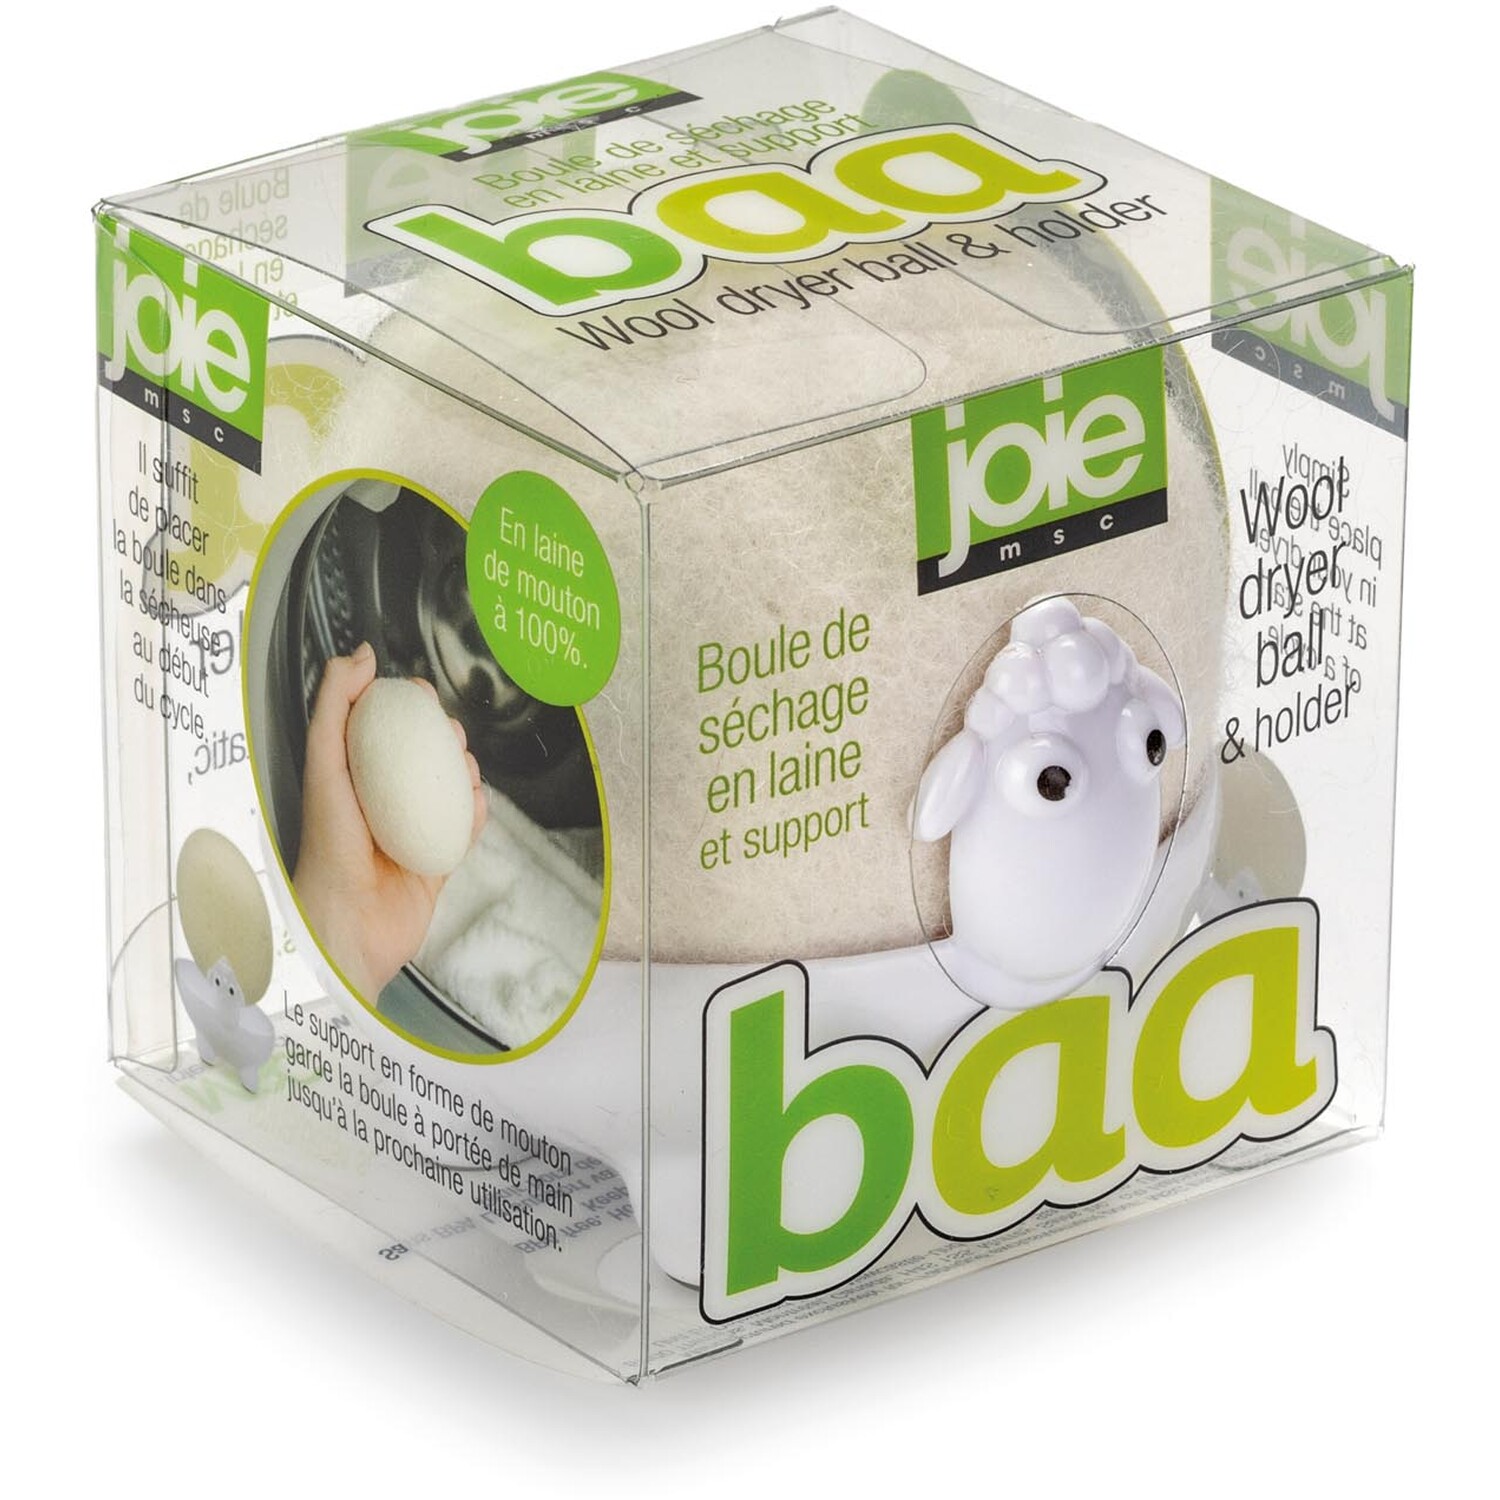 Joie Sheep Wool Dryer Ball & Holder Image 3